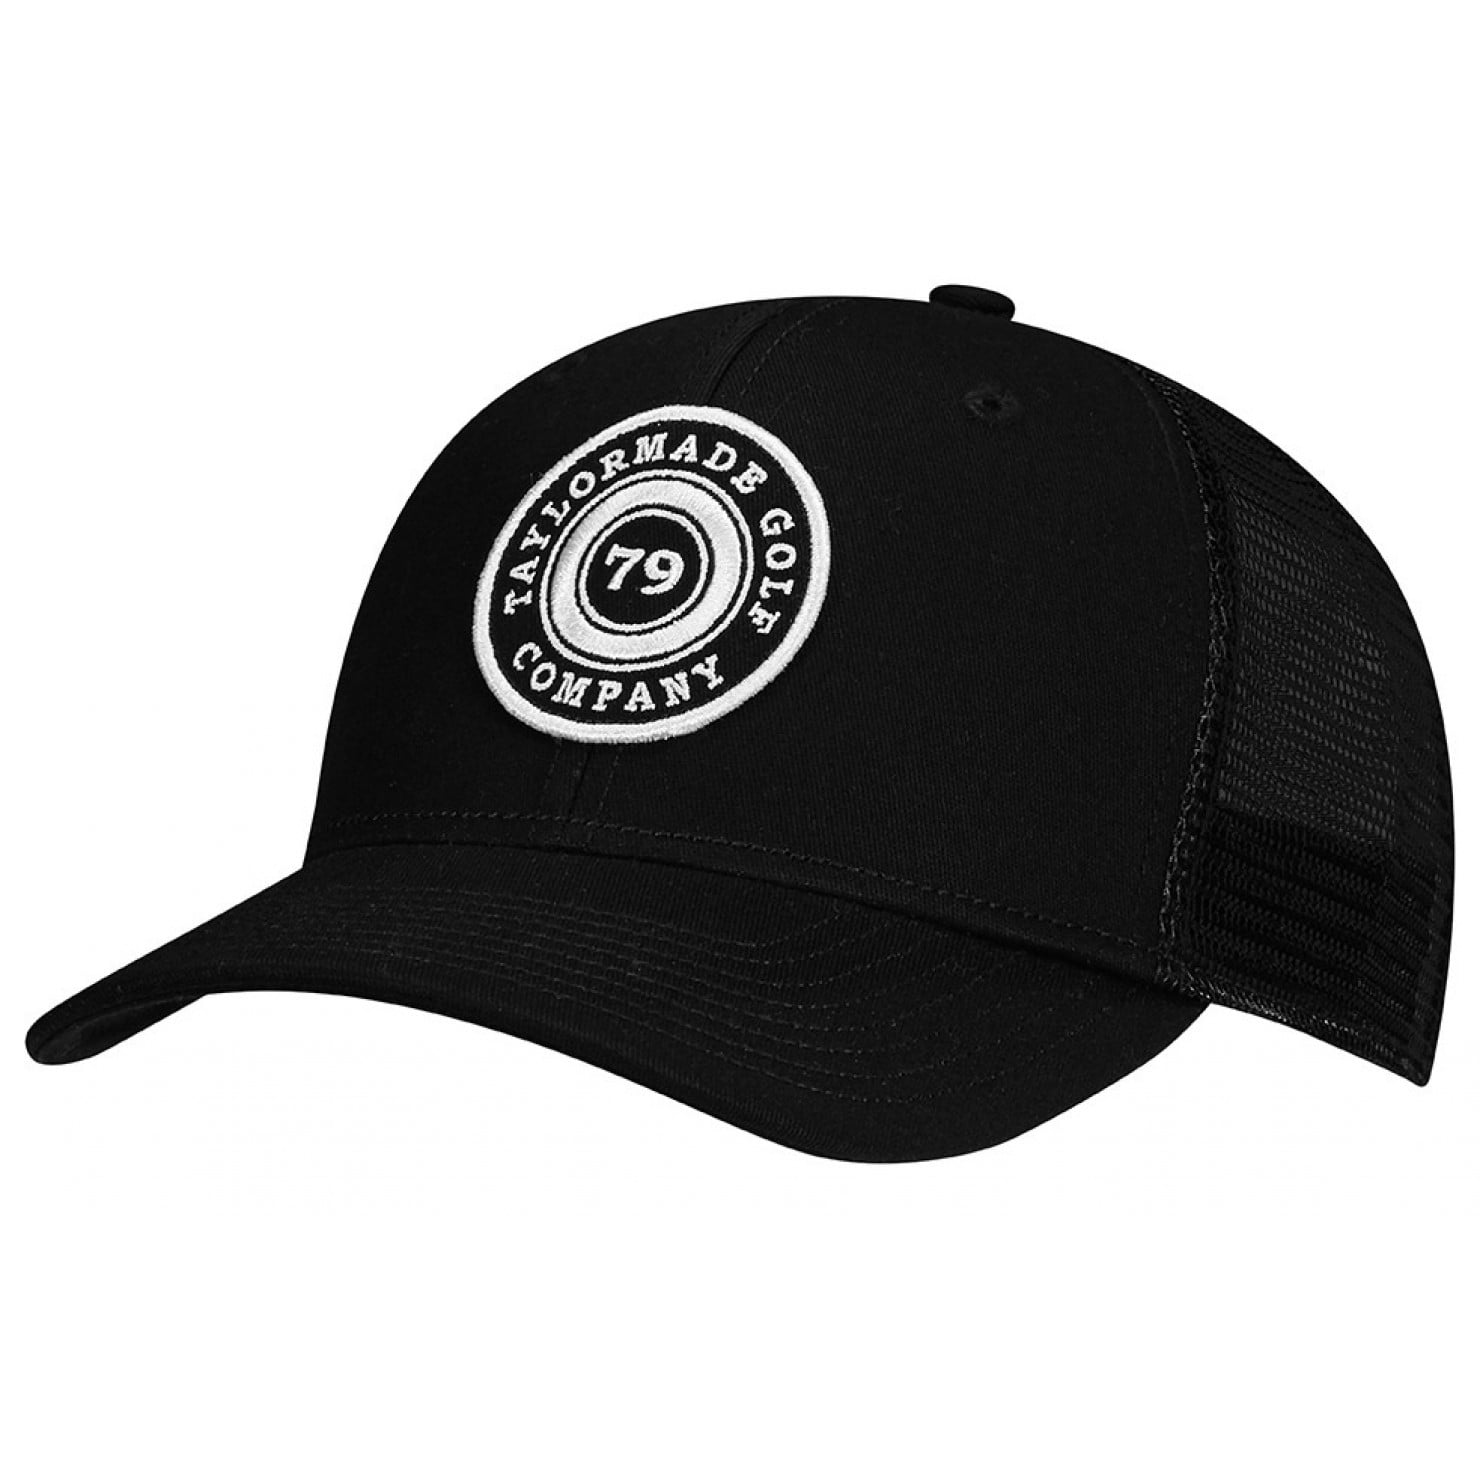 TaylorMade Lifestyle Trucker Hat (black) - Walmart.com - Walmart.com